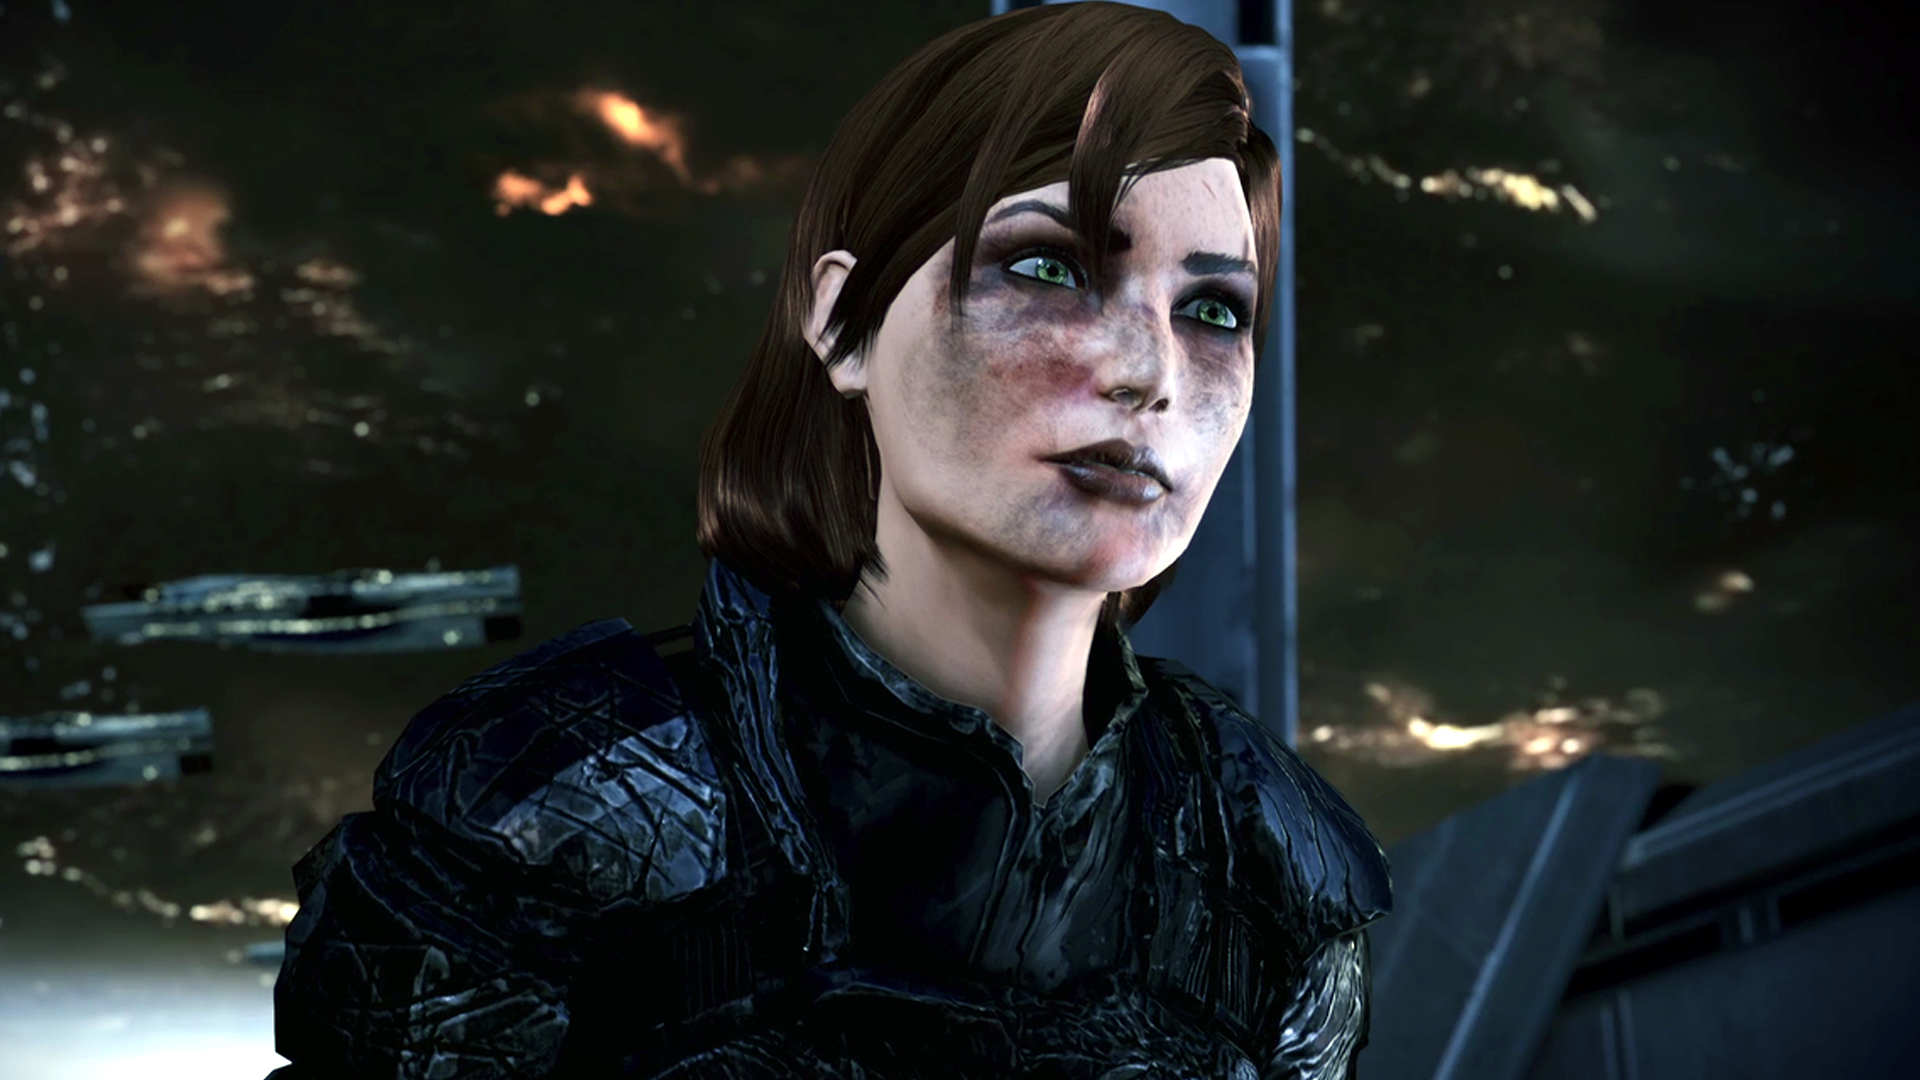 Mass Effect 3’s original ending had a Reaper Queen rather than the Catalyst